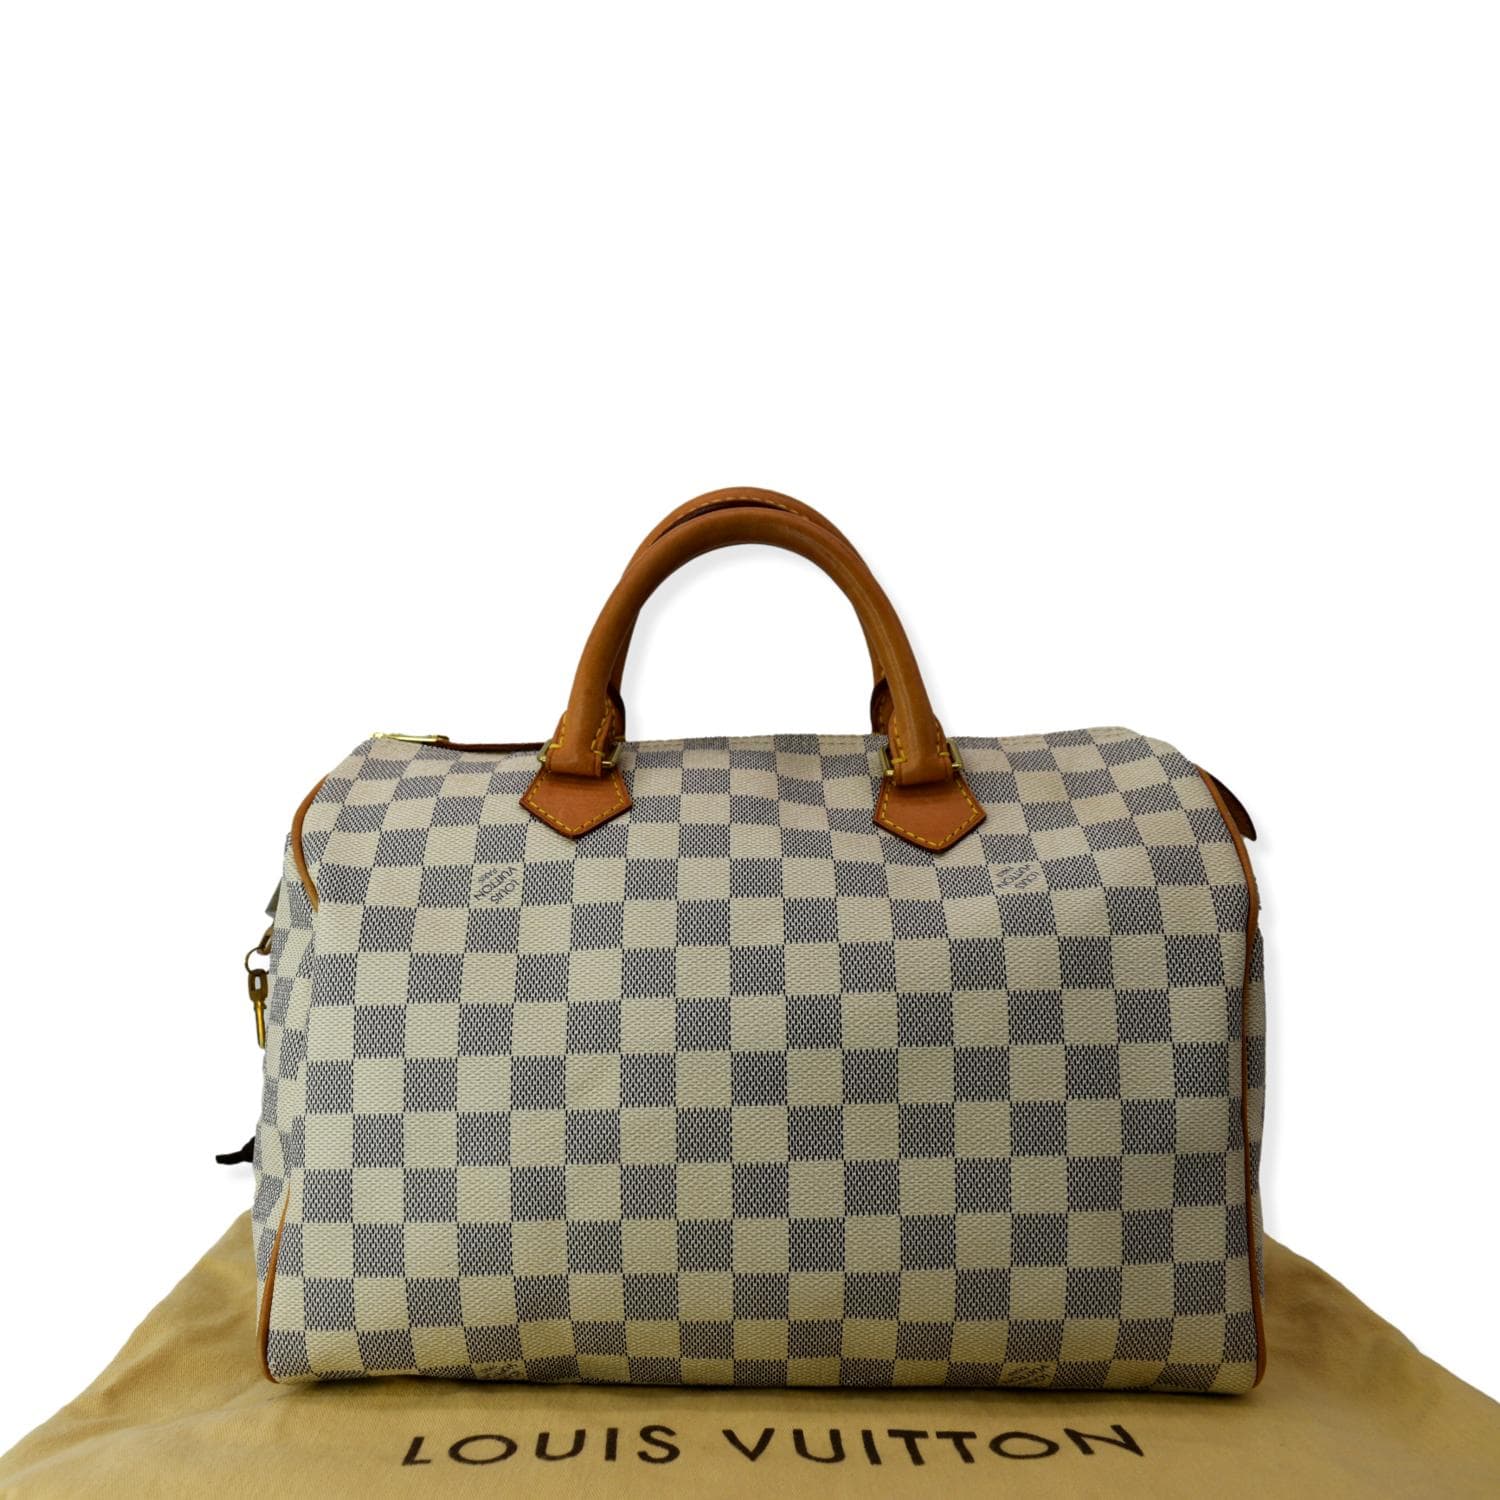 Louis Vuitton Speedy 20 Damier Ebene Unboxing Review! 😍 